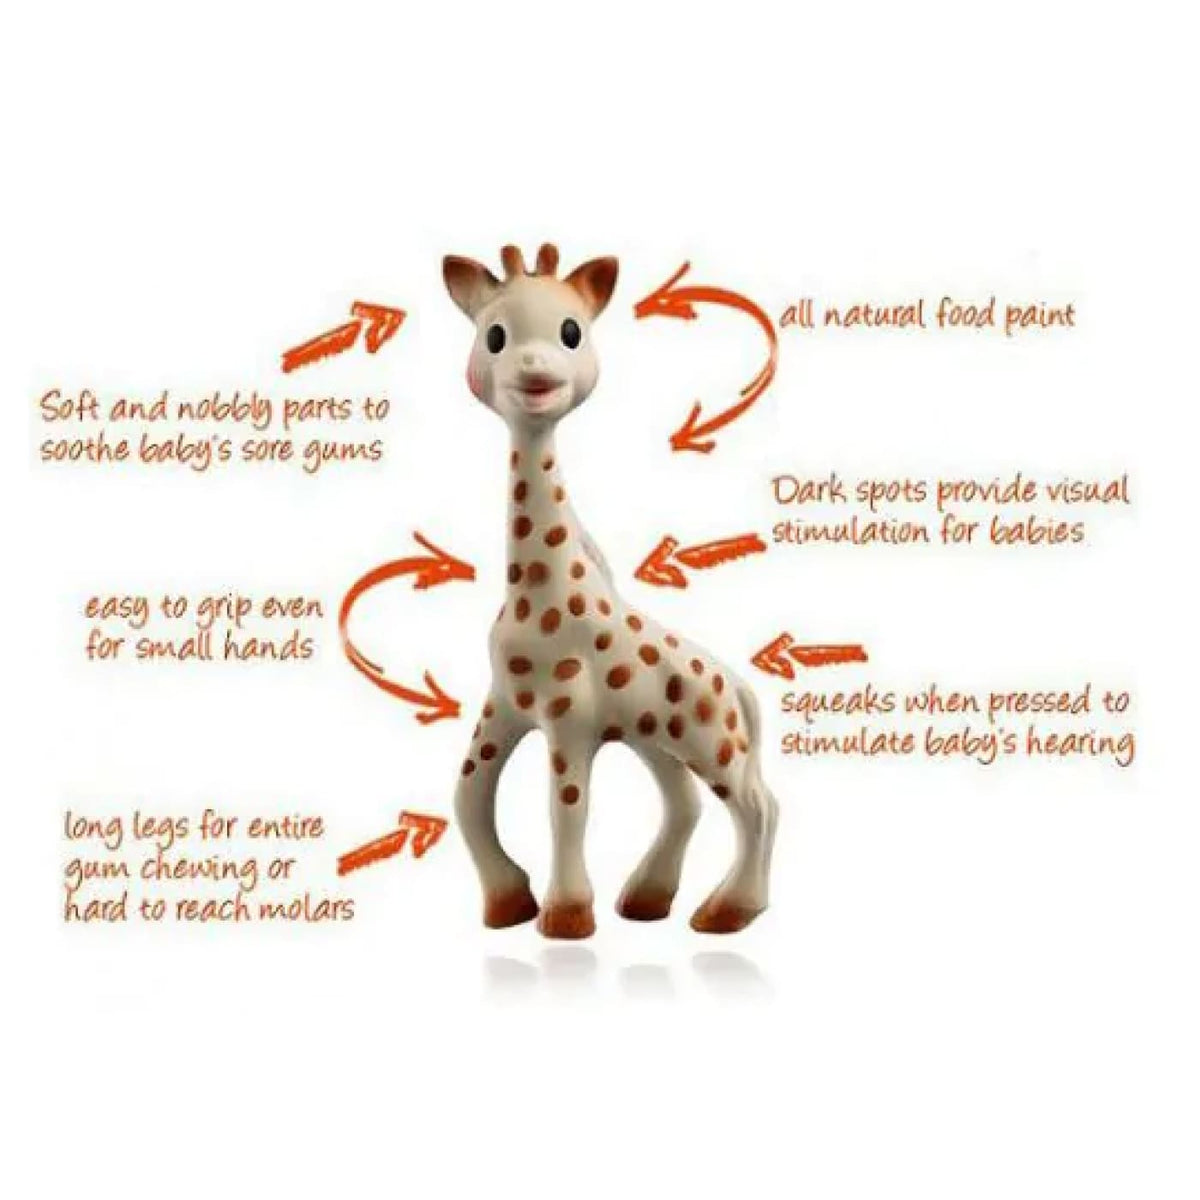 Vulli Sophie The Giraffe Gift Box - Sophie Giraffe - NURSING &amp; FEEDING - TEETHERS/TEETHING JEWELLERY